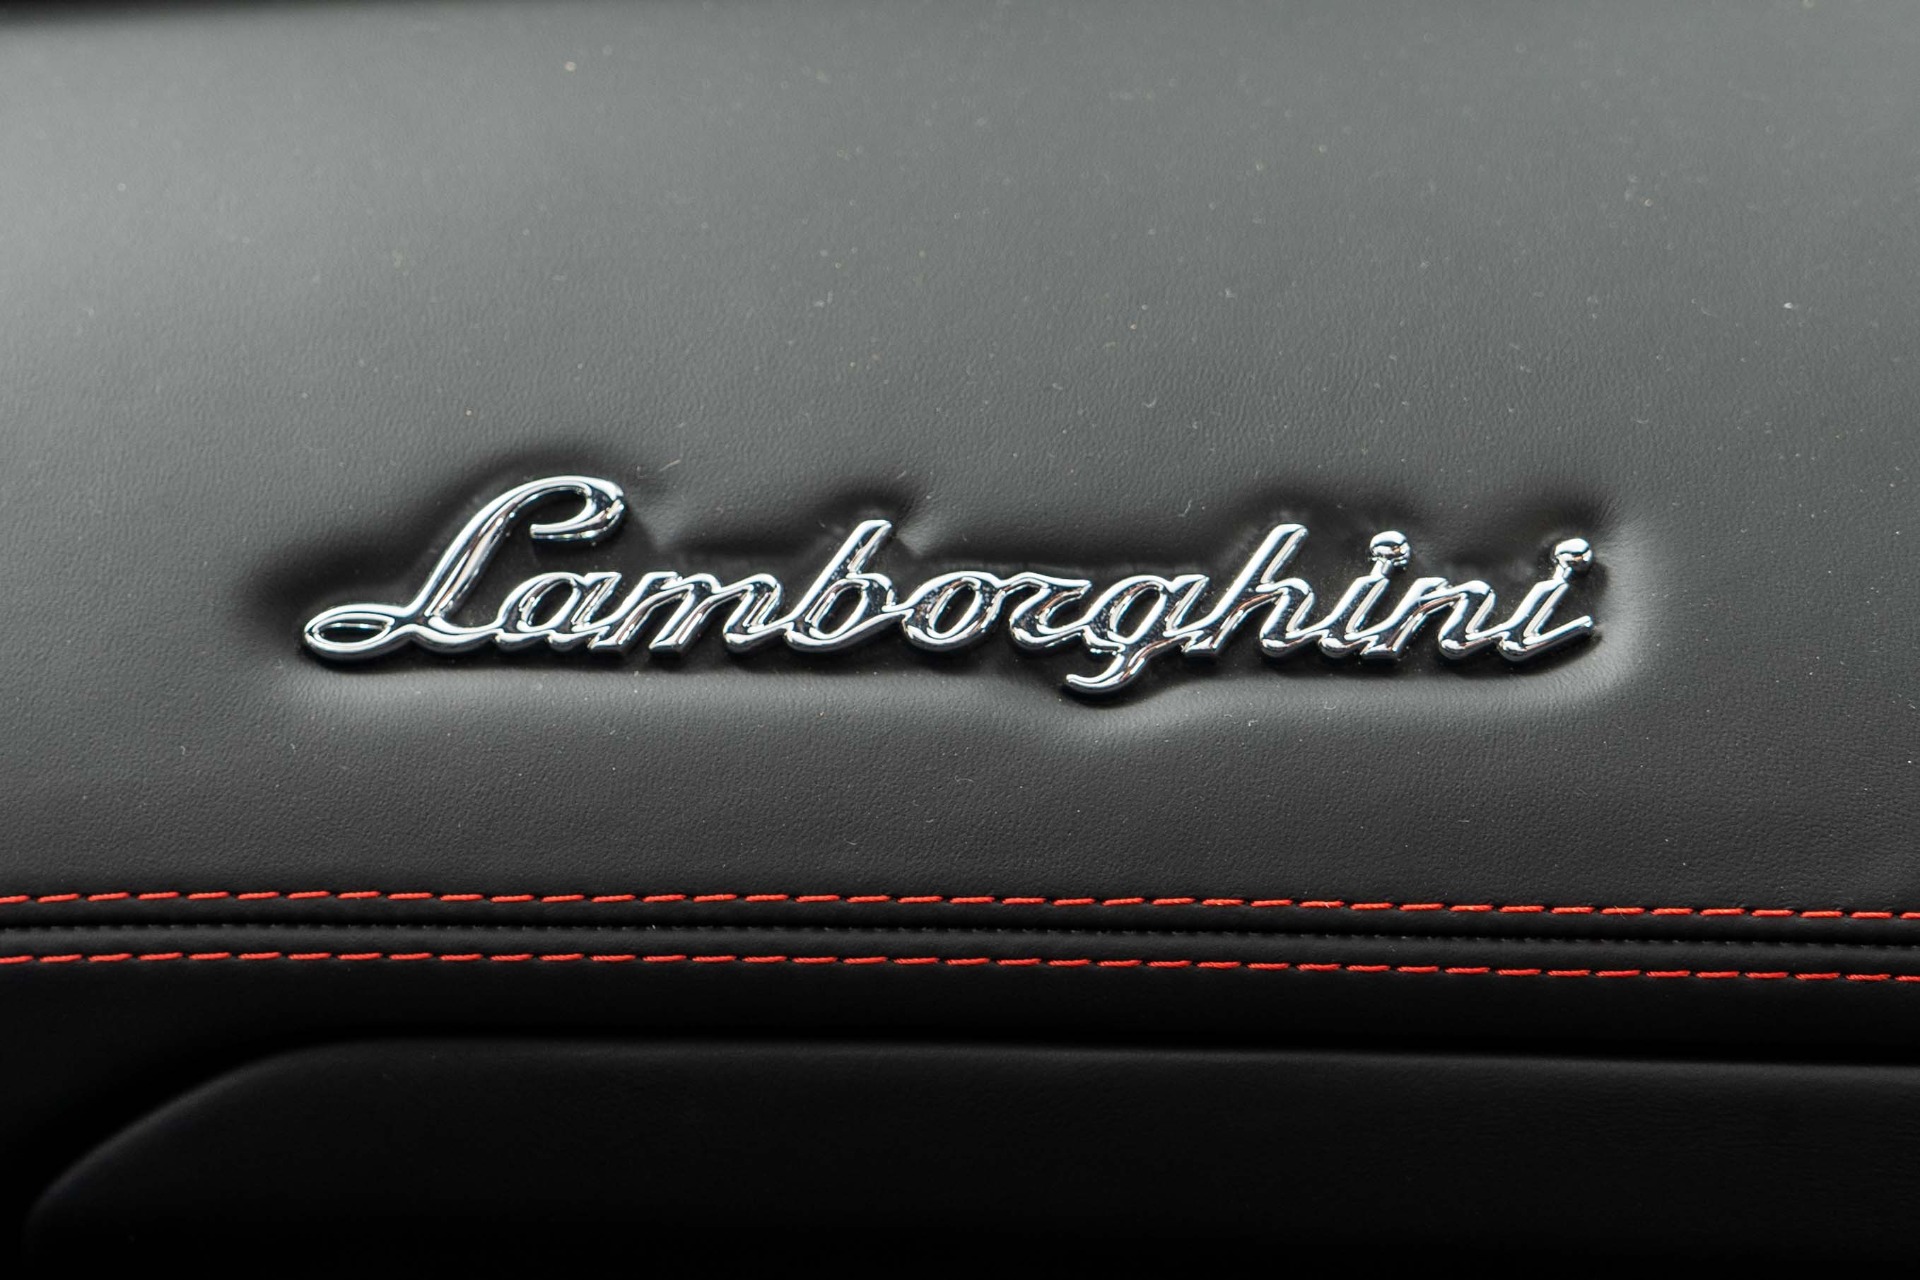 Mercedes Brabus Bodyside Emblem Gold Dark Carbon Edition, Metal Emblems, Accessories